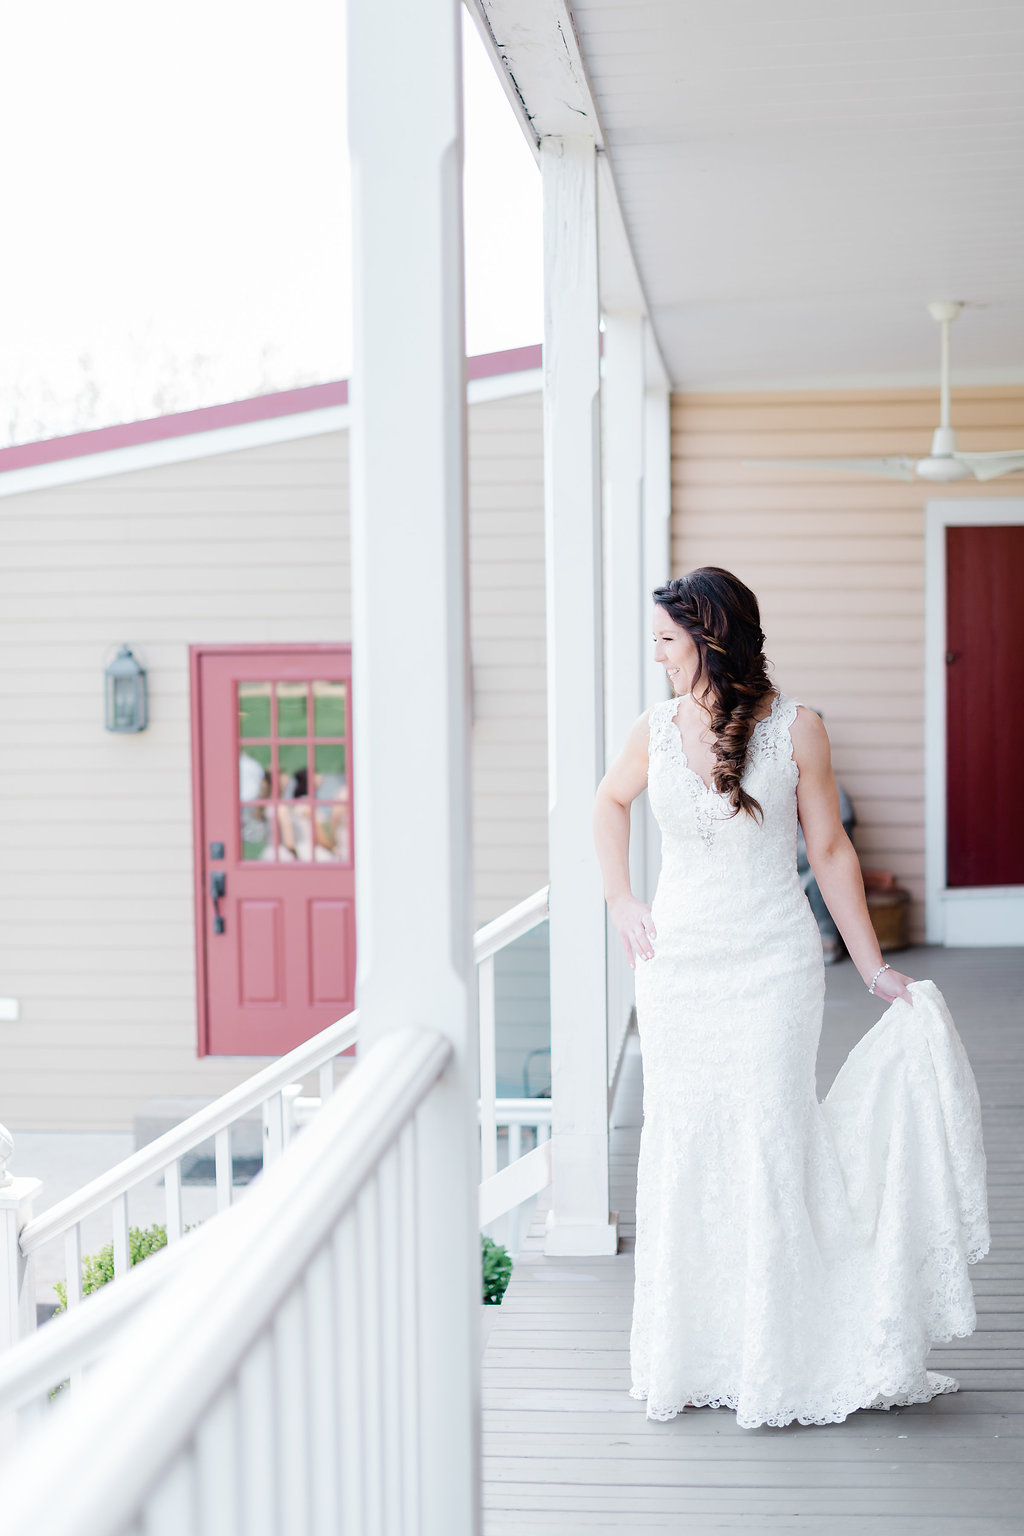 Rustic Barn Wedding - Riverside on the Potomac Wedding - The Overwhelmed Bride Wedding Blog